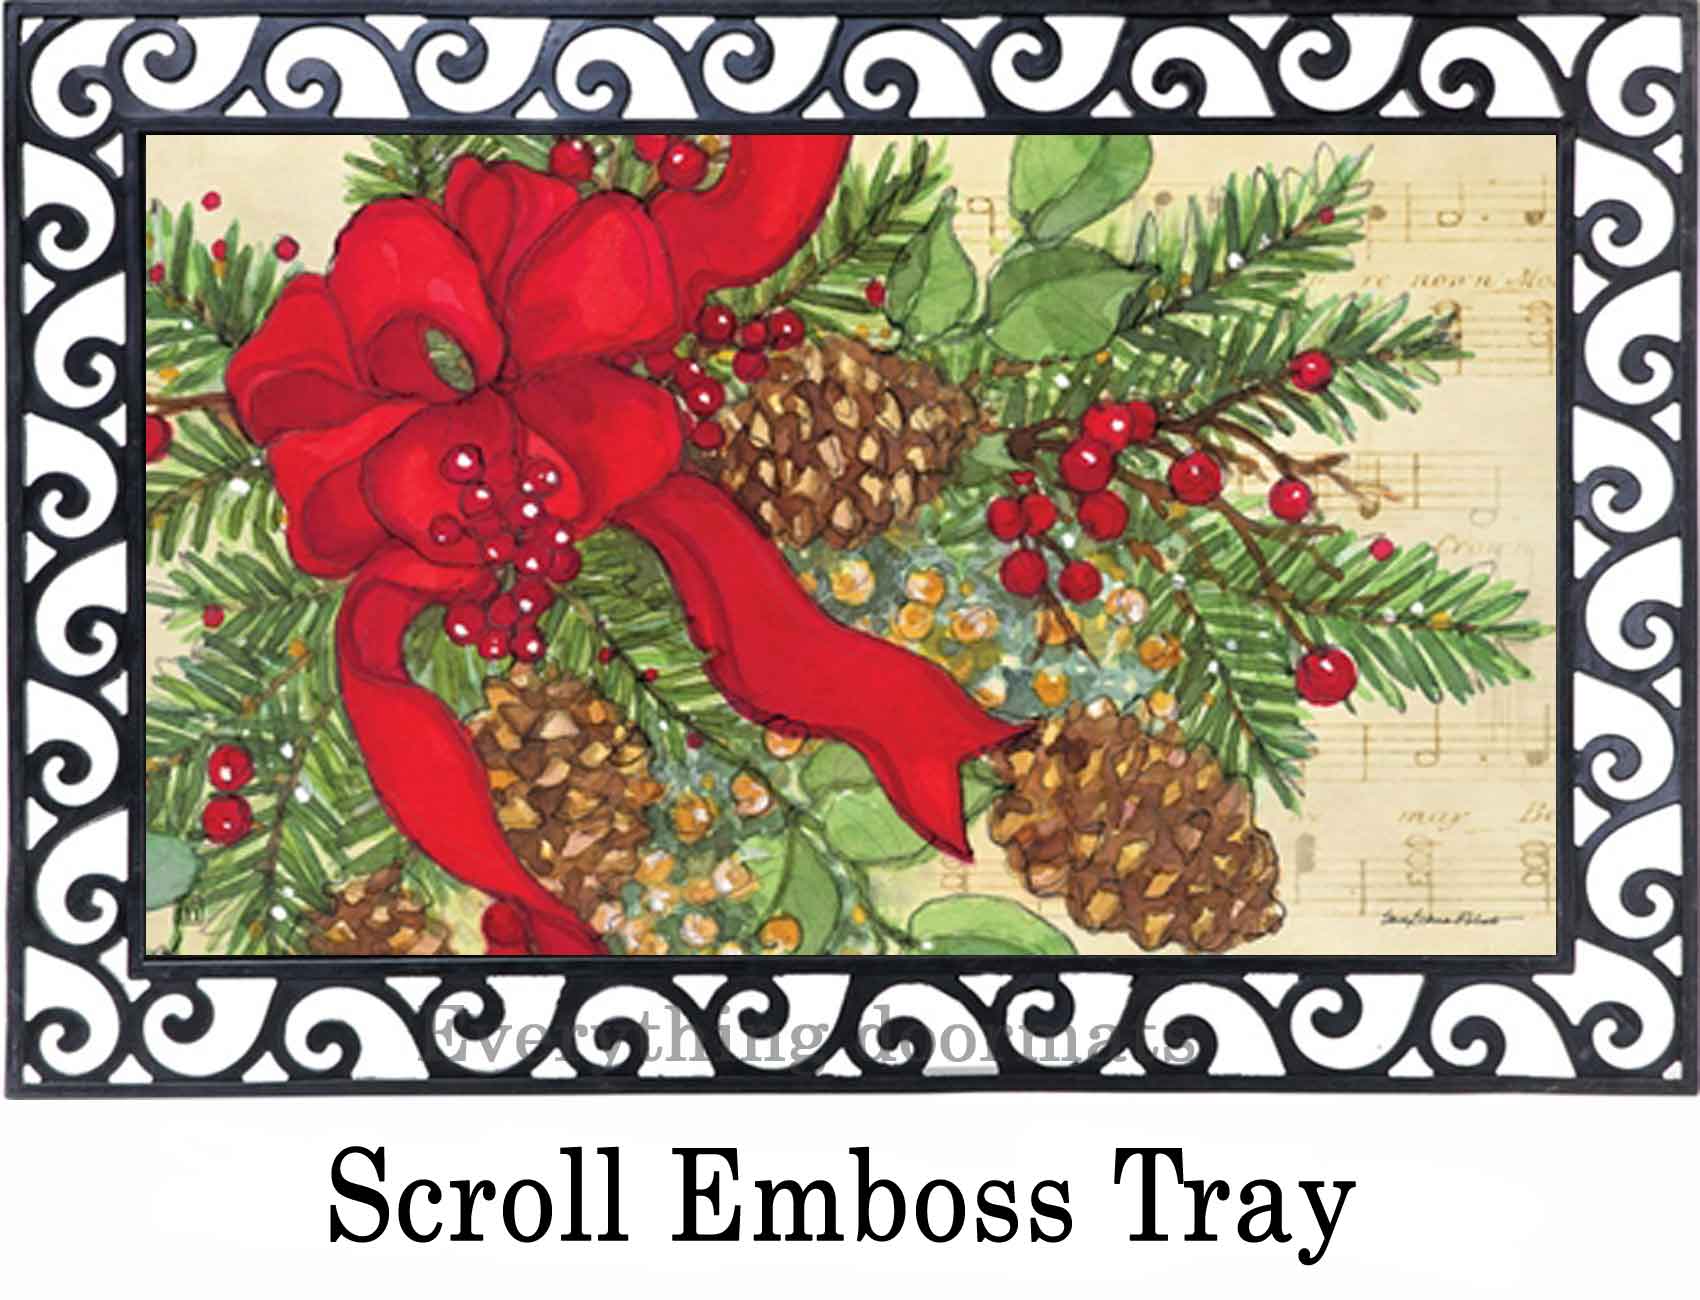 https://www.everythingdoormats.com/images/products/holiday-swag-matmates-insert-doormat-in-outdoor-scroll-emboss-doormat-tray.jpg